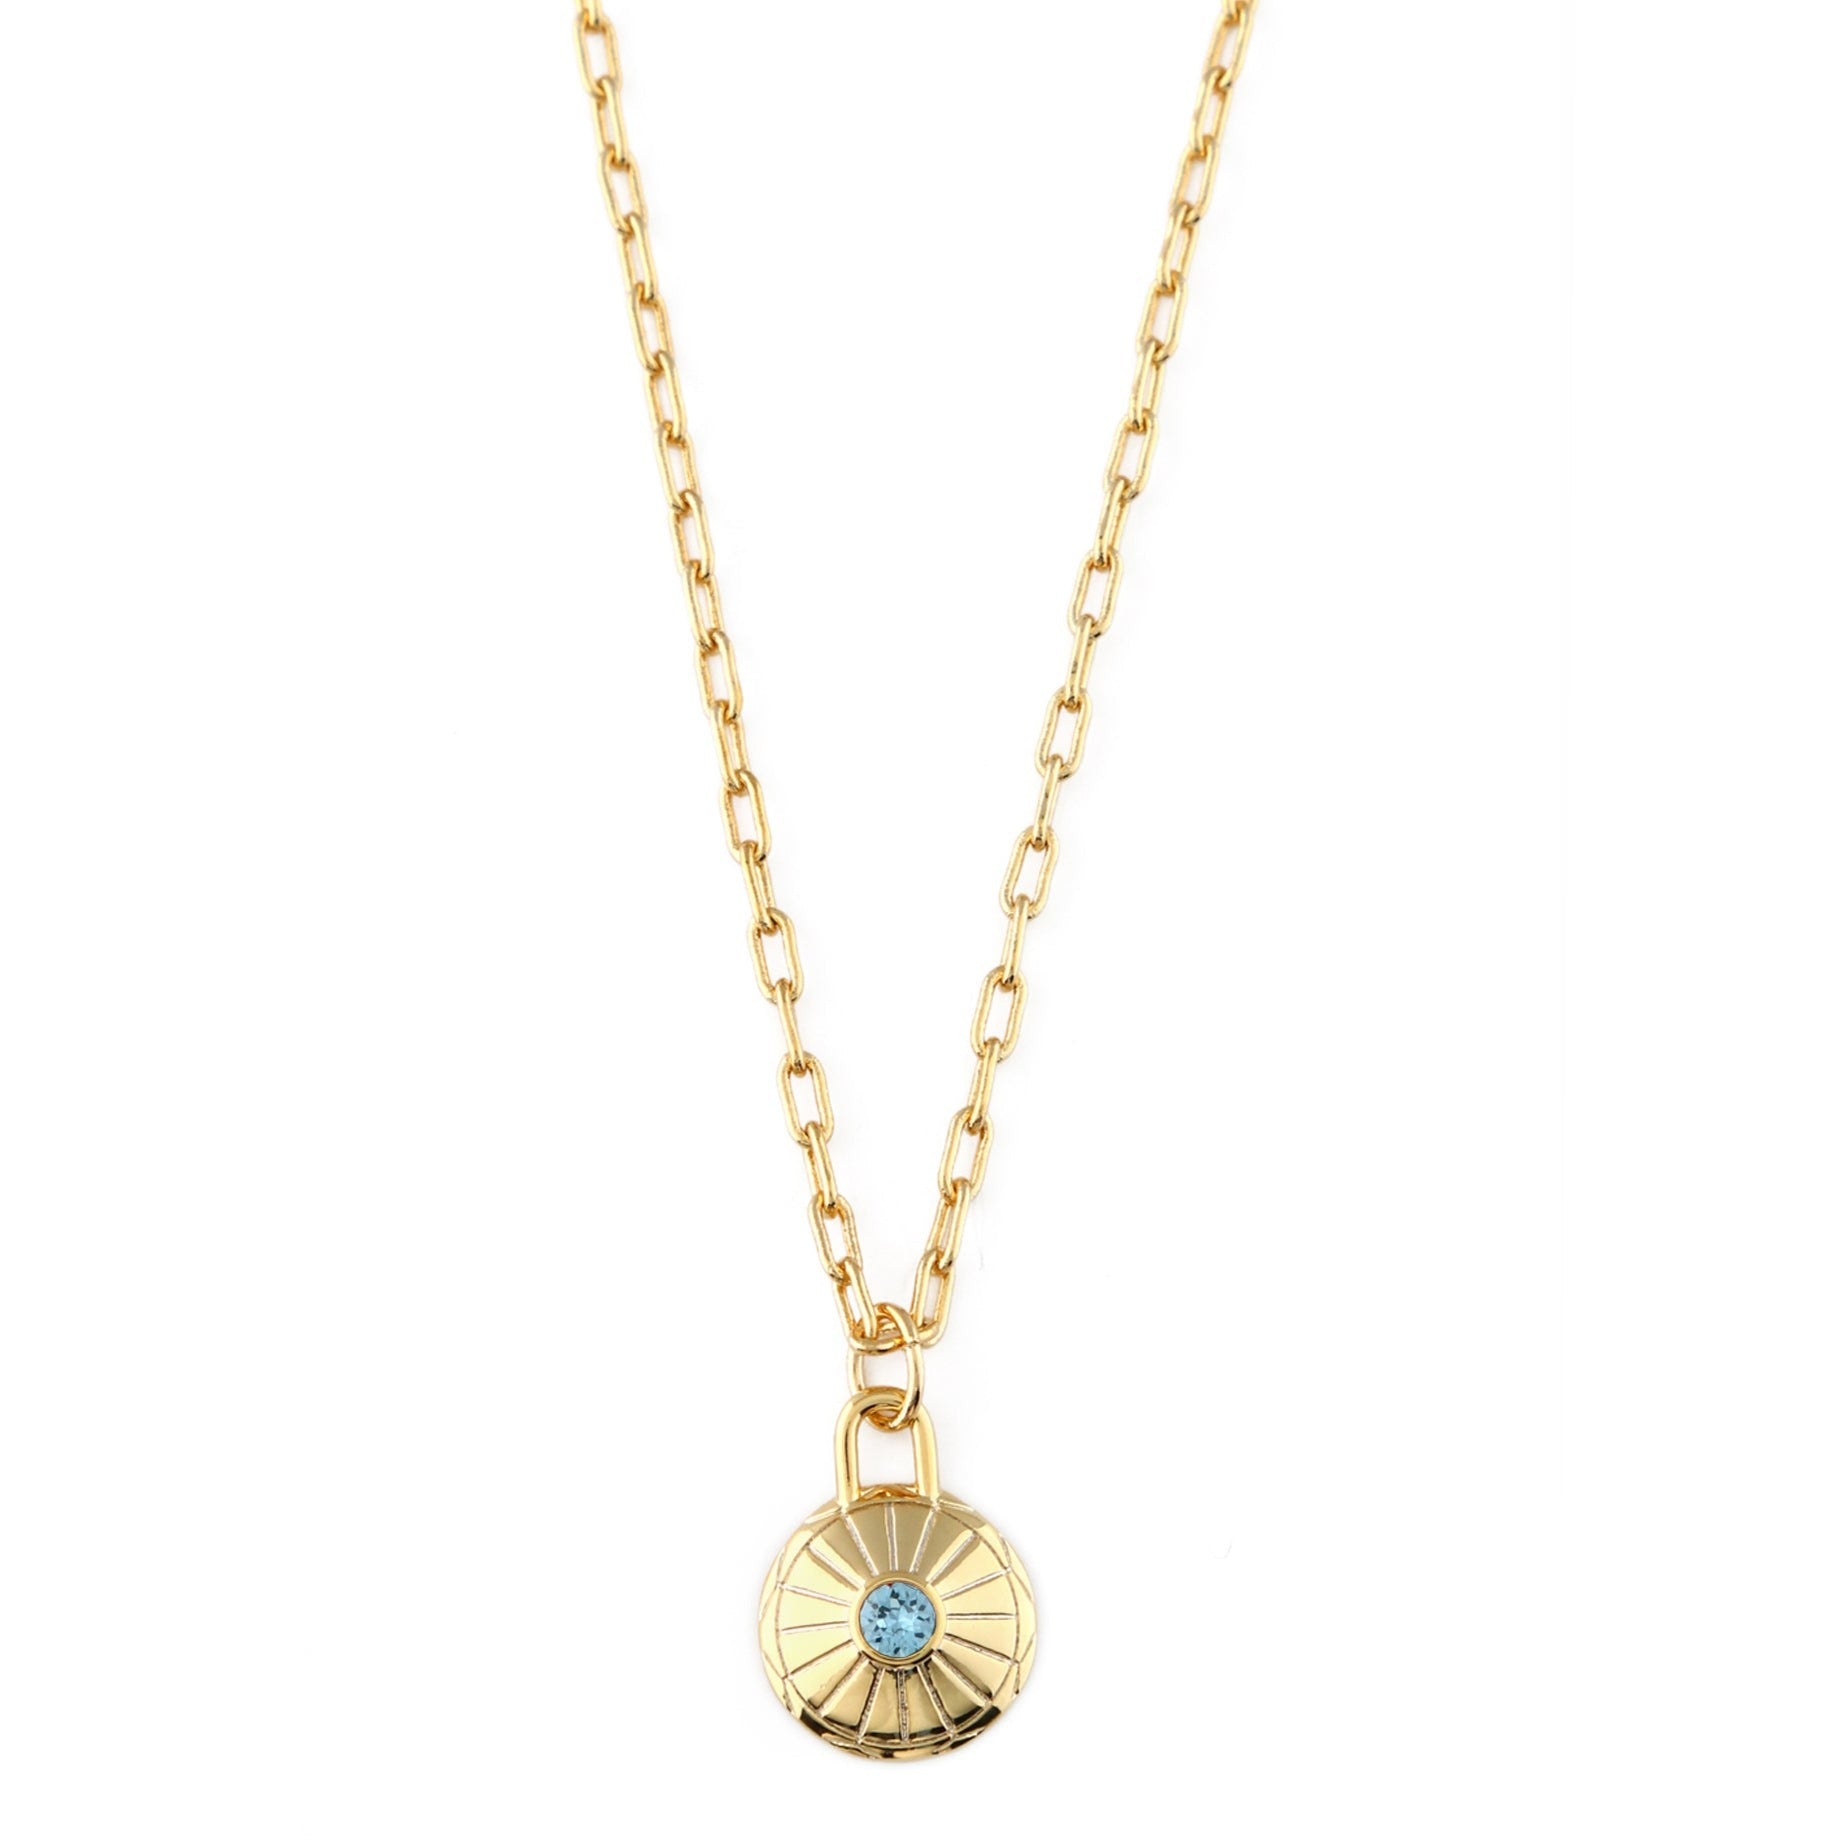 March Birthstone Necklace Made With Swarovski Crystals - Gold - Orelia London